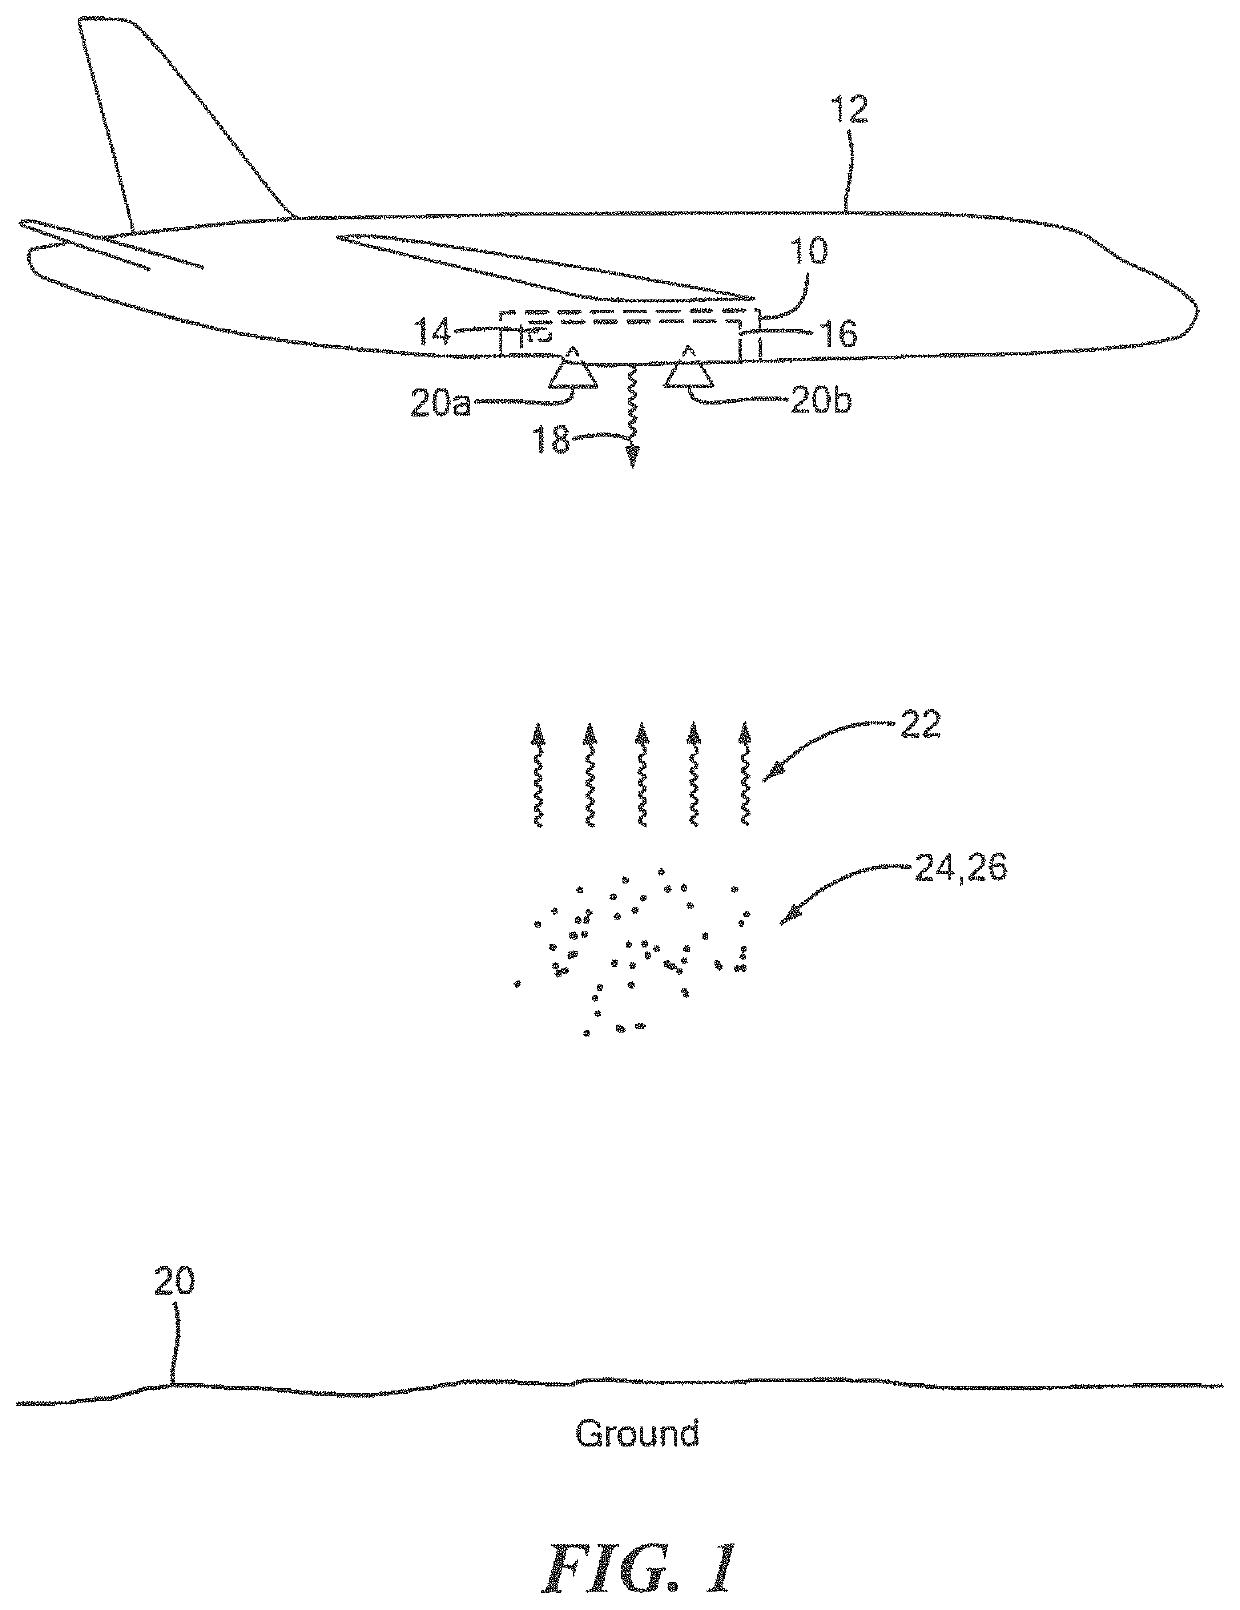 Airborne wind profiling portable radar system and method